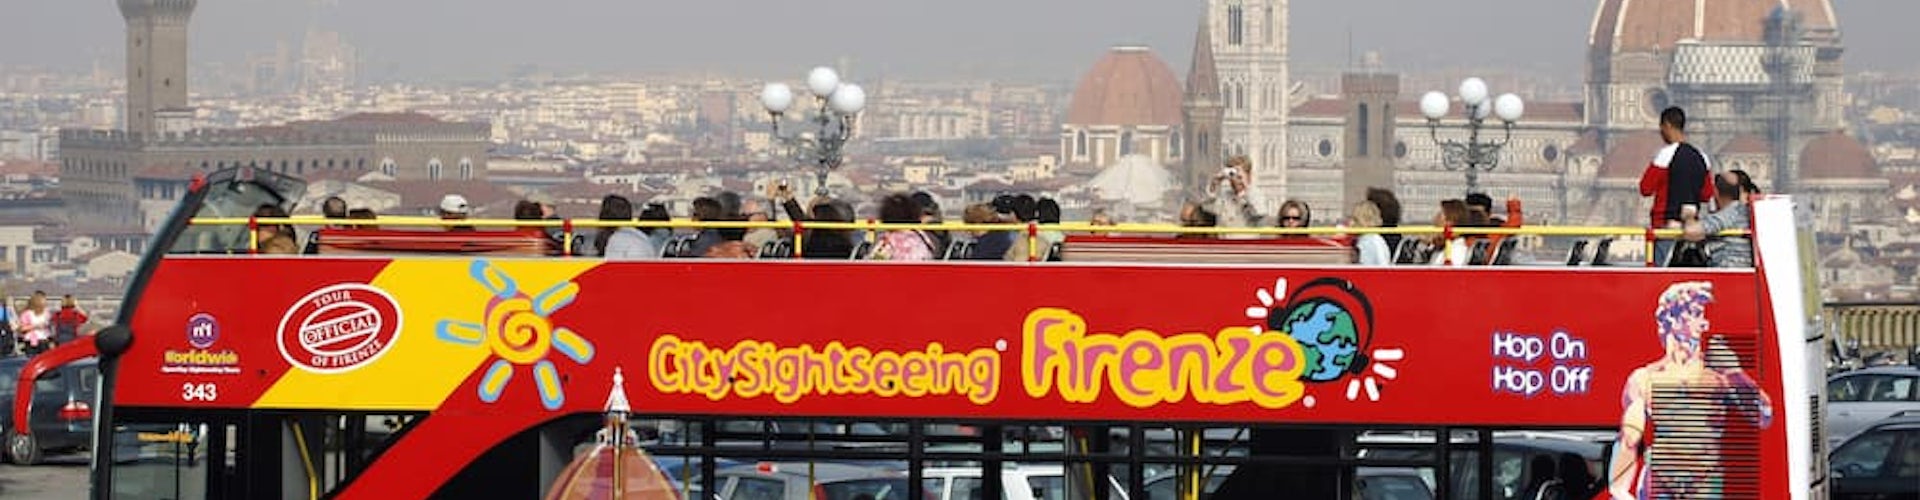 City Sightseeing Firenze